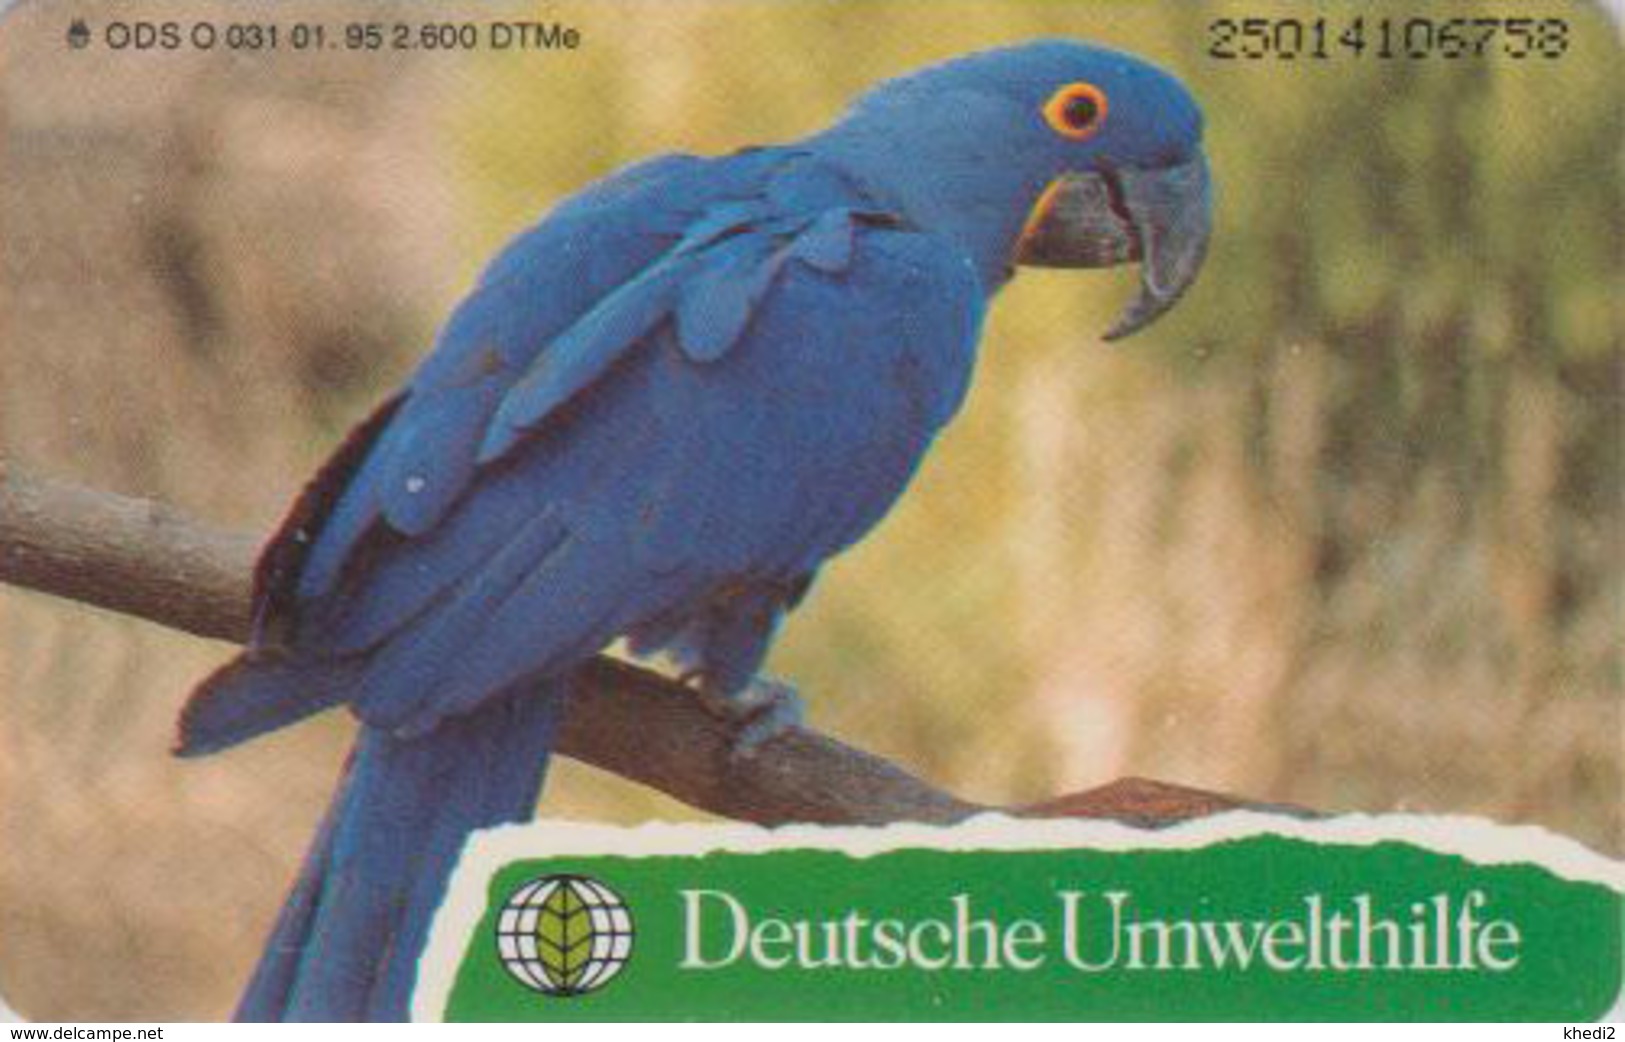 Télécarte à Puce Allemagne - DEUTSCHE UMWELTHILFE - ANIMAL - OISEAU ARA PERROQUET PARROT BIRD - Chip Phonecard - Parrots